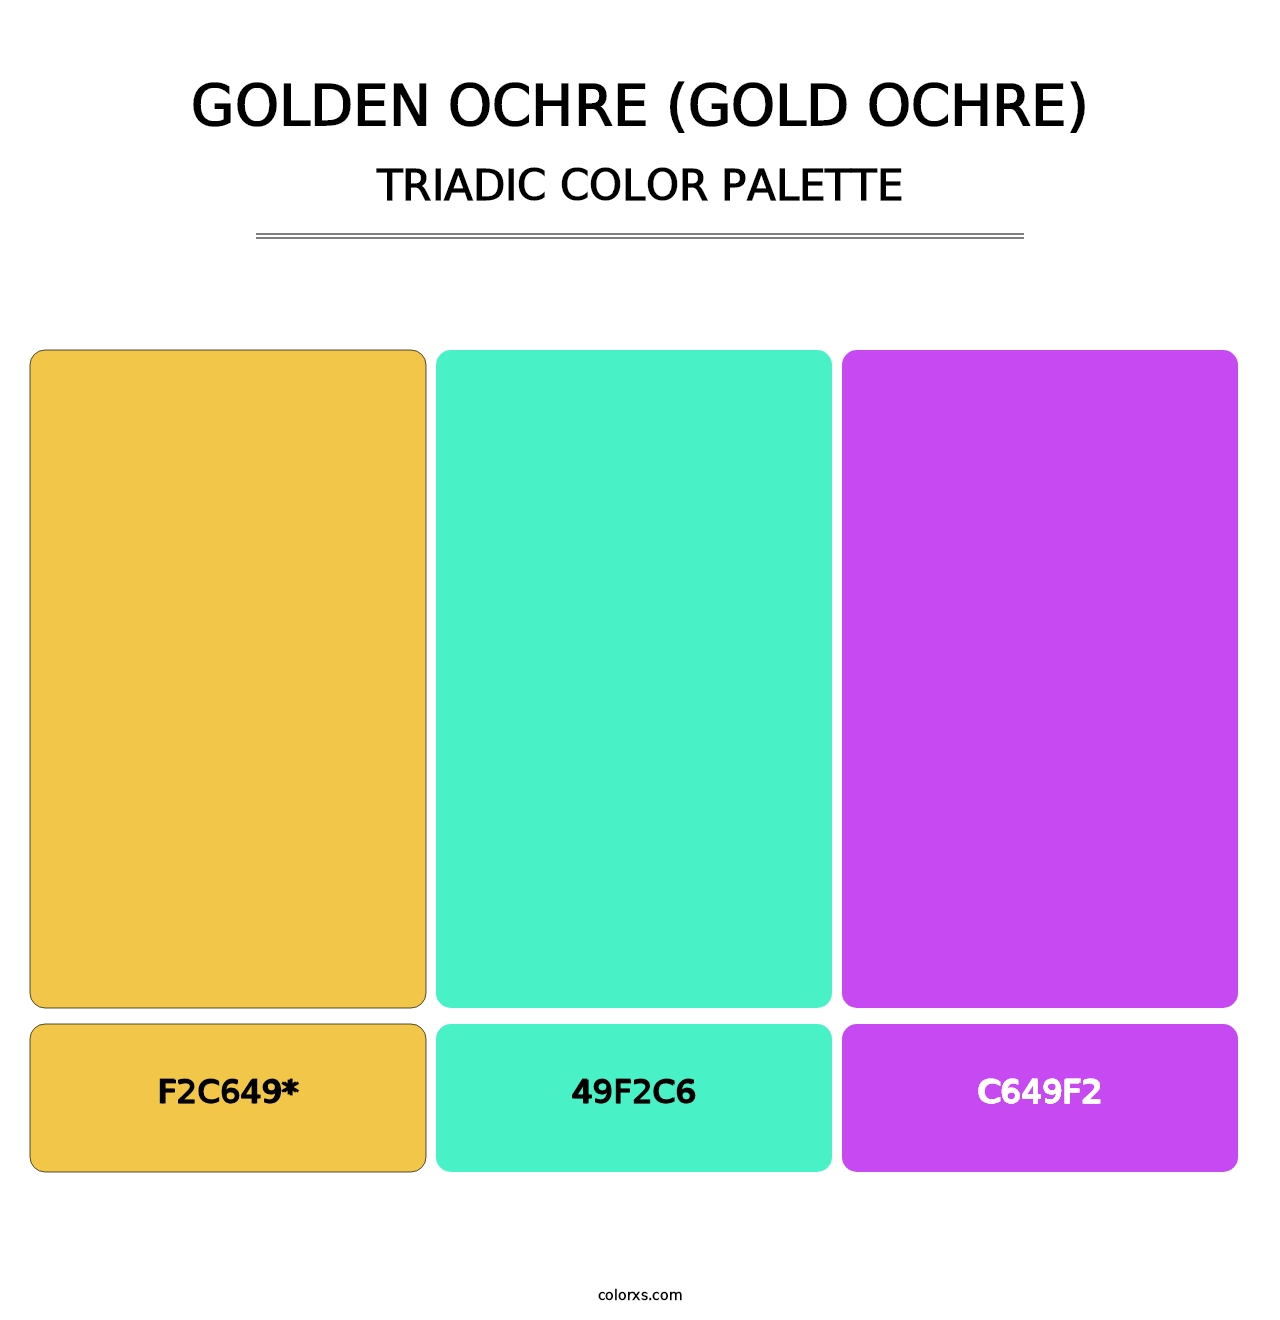 Golden Ochre (Gold Ochre) - Triadic Color Palette